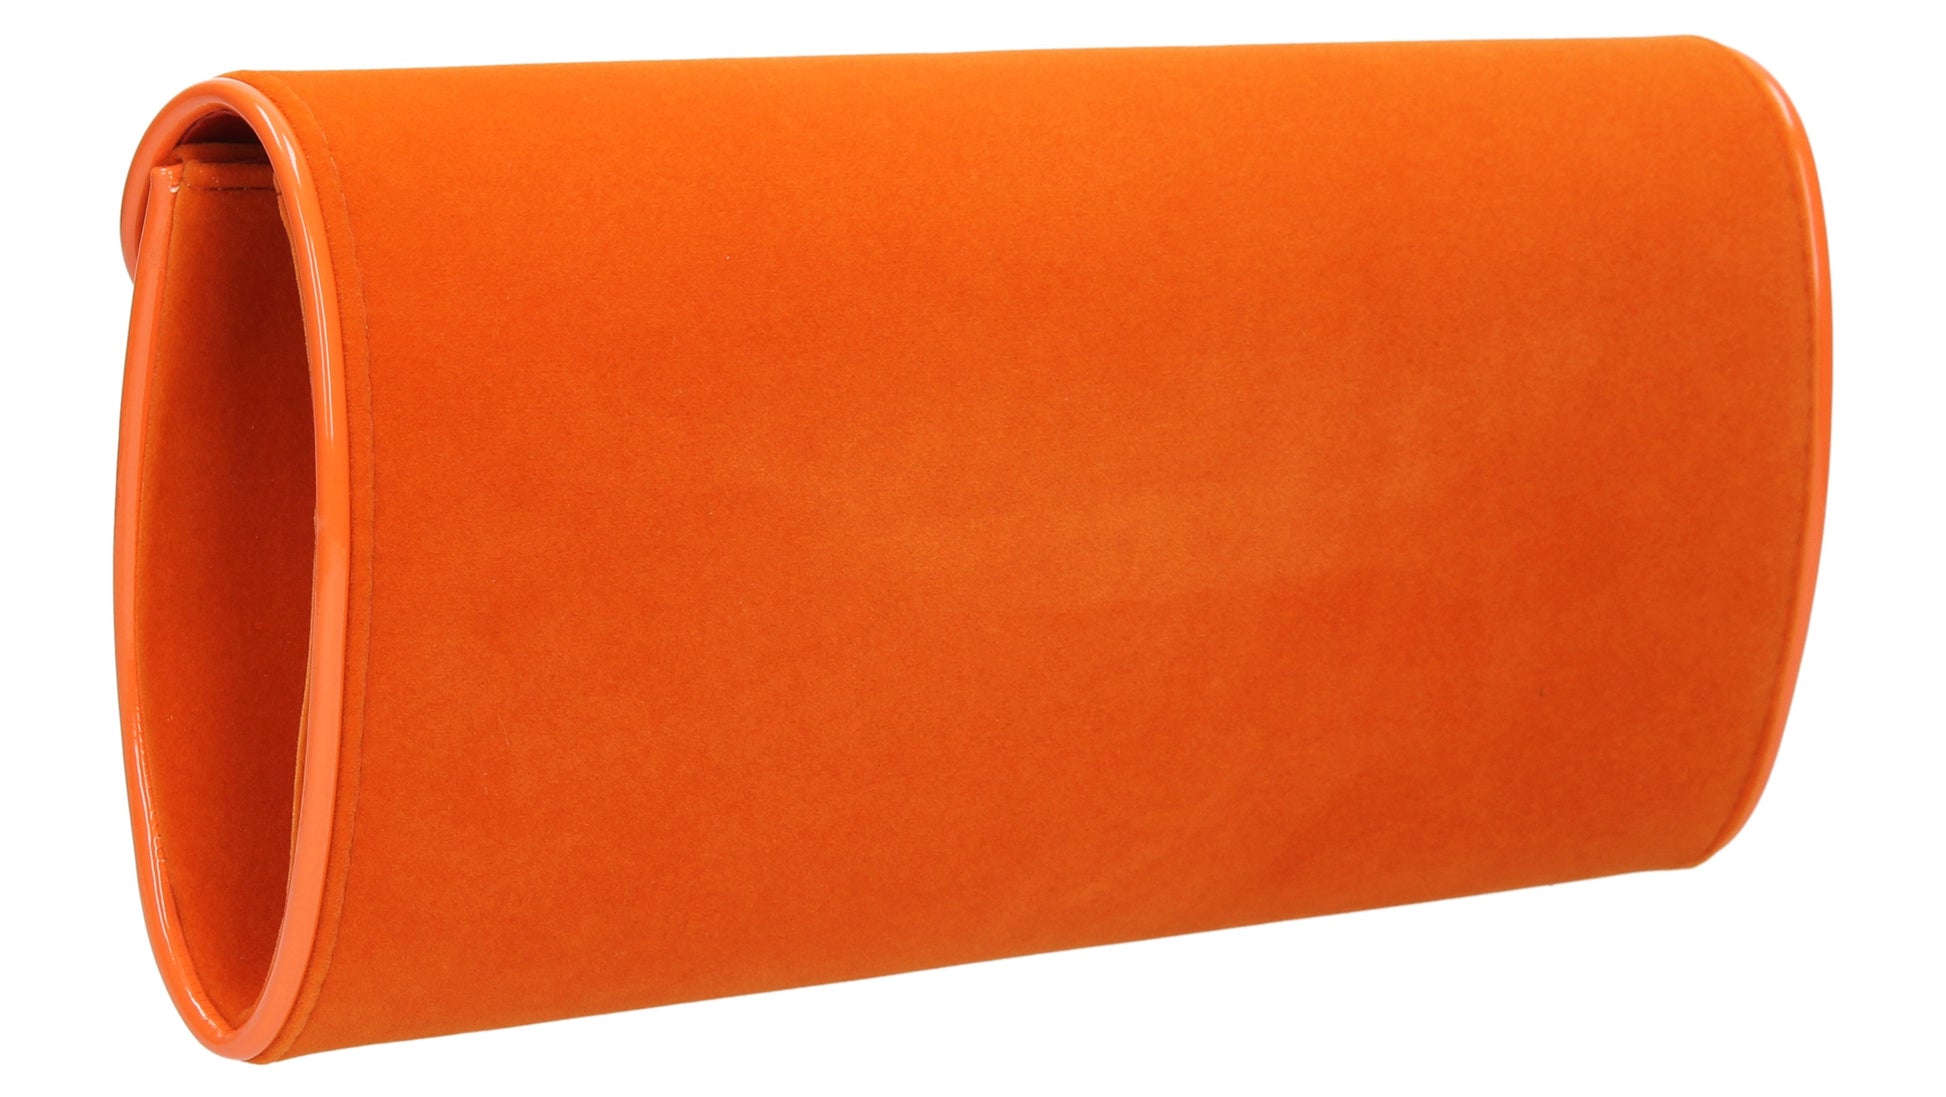 SWANKYSWANS Perry Velvet Clutch Bag - Orange Cute Cheap Clutch Bag For Weddings School and Work